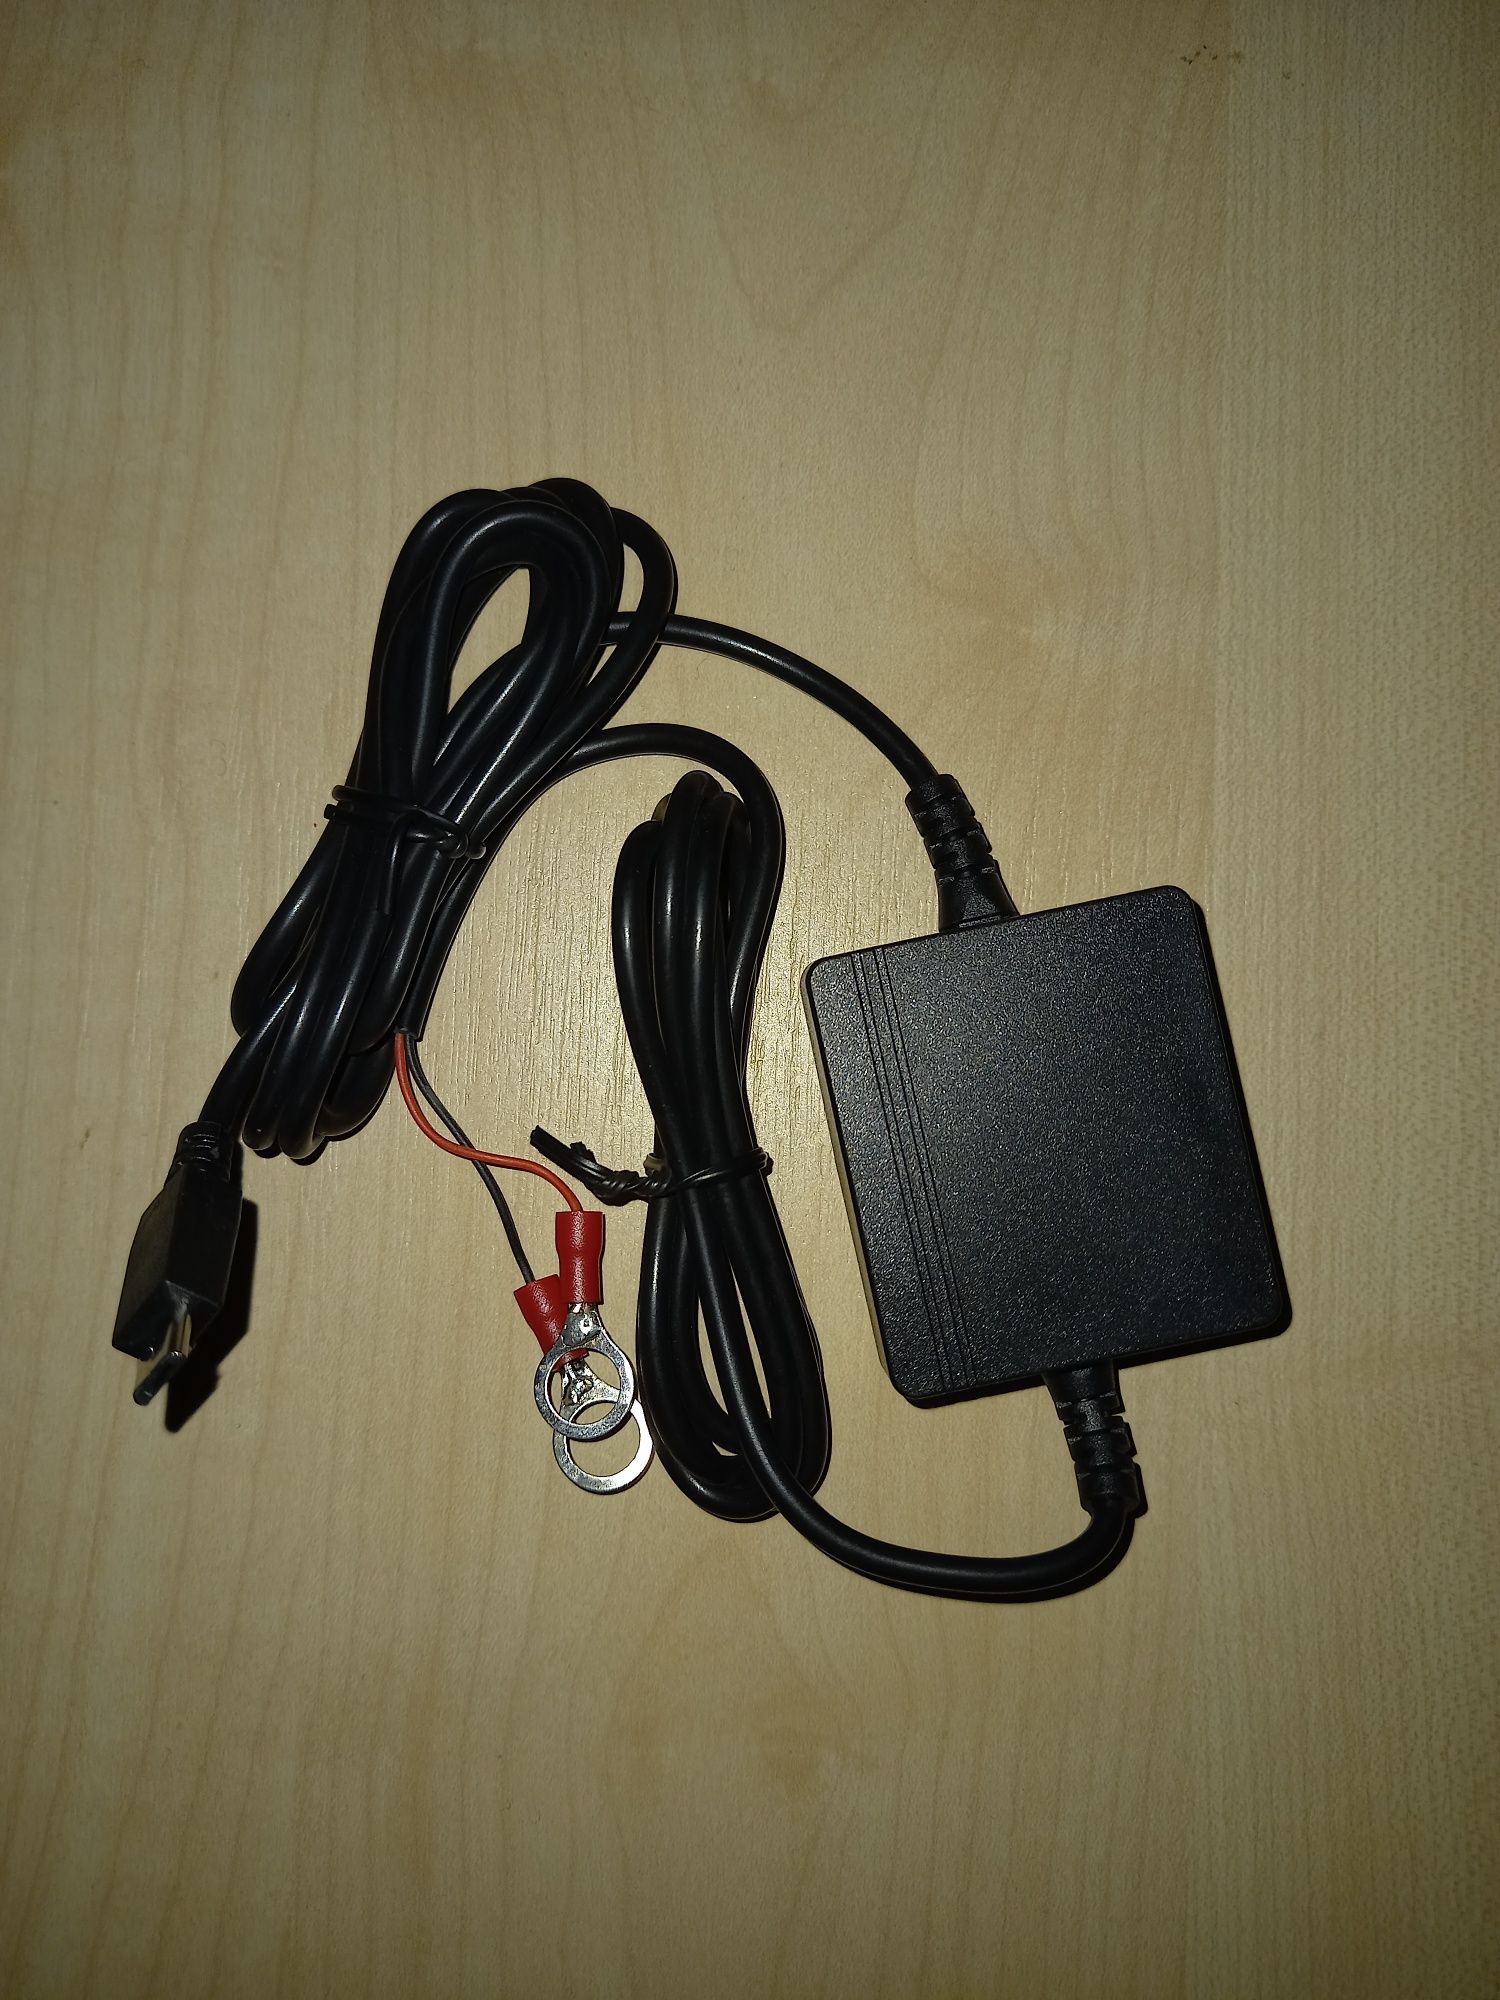 Vand Incarcatoare Auto 12-24V pentru Tkstar GPS Tracker si cablu micro